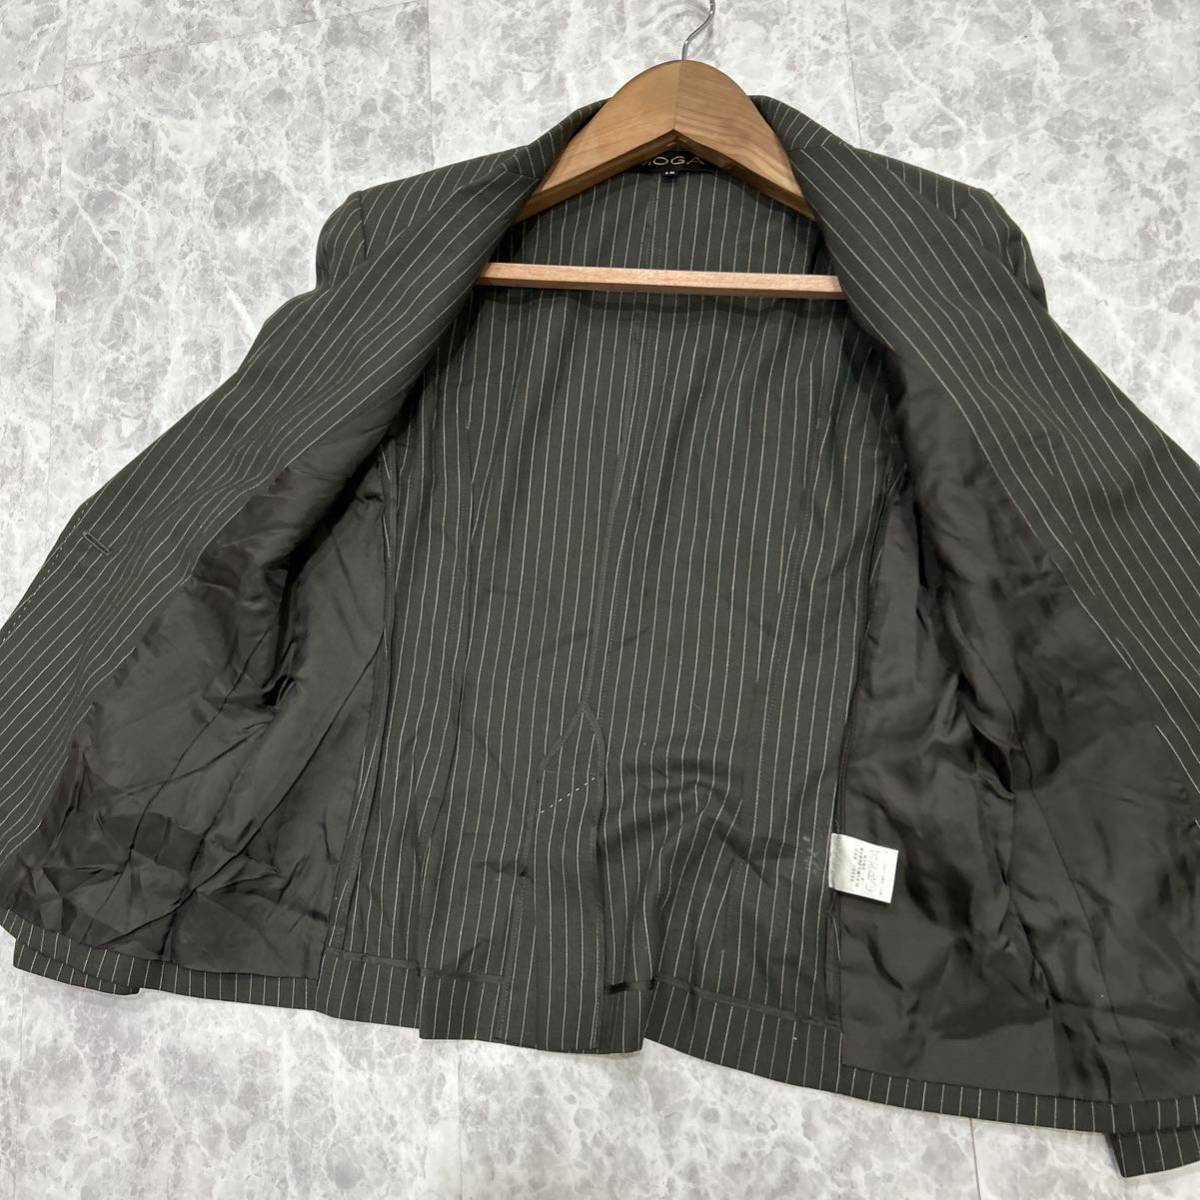 D @ 日本製 '洗礼されたデザイン'『MOGA モガ』高品質 WOOL混 ストライプ柄 1釦 テーラードジャケット 15 レディース 婦人服 アウター_画像5